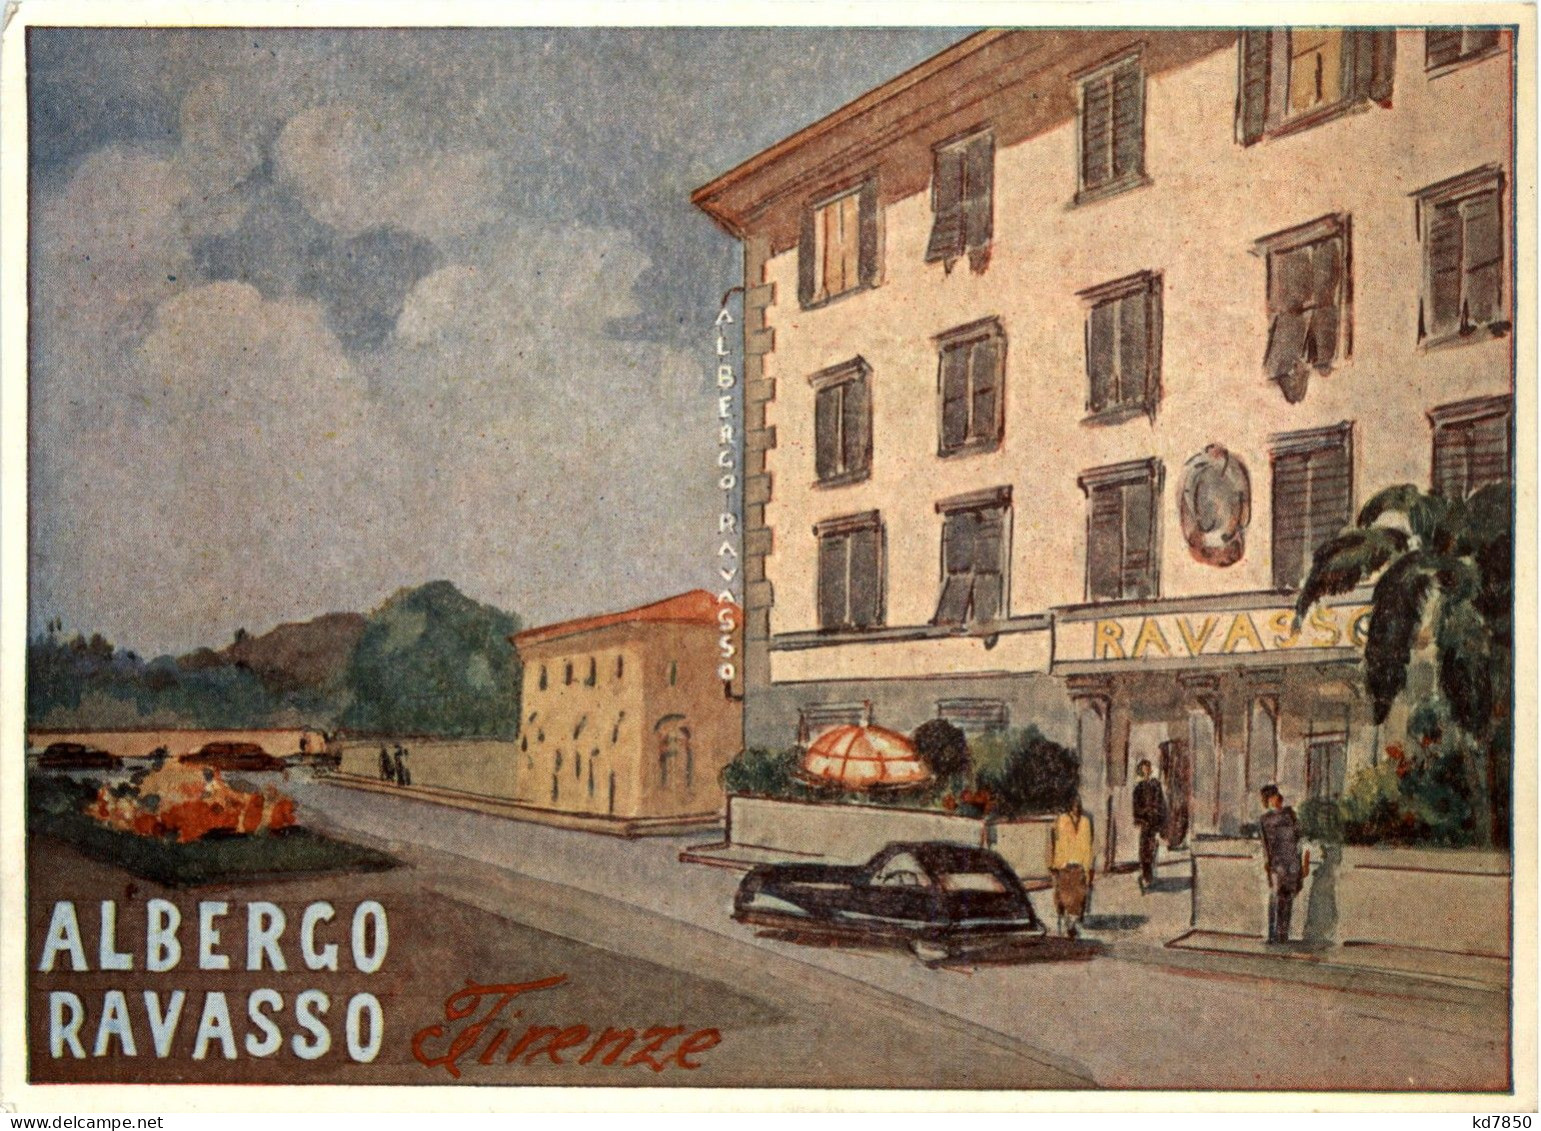 Firenze - Albergo Ravasso - Firenze (Florence)